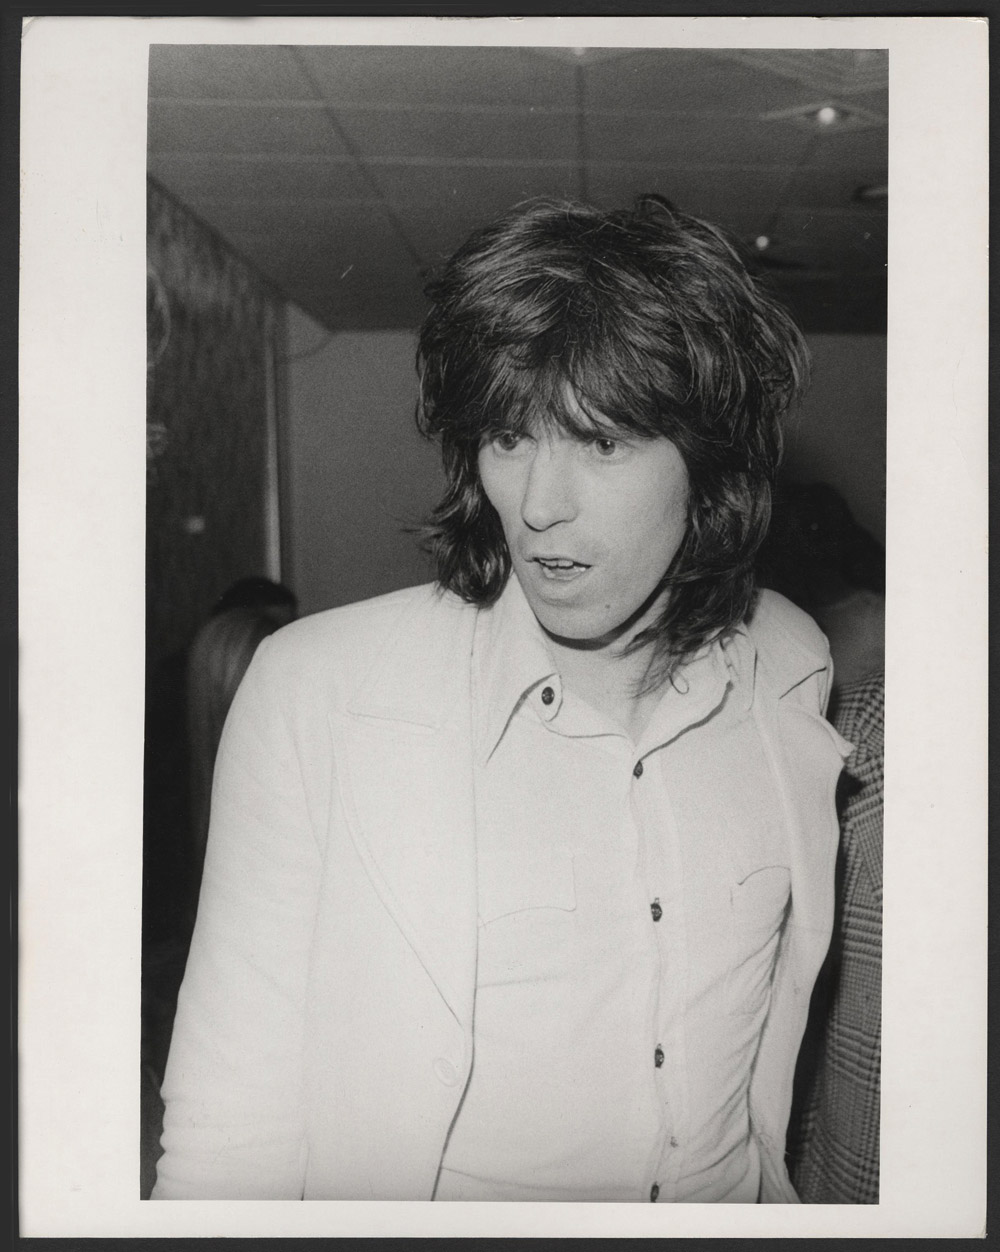 Keith Richards trades in bandana for dishevelled hair | Celebrity News |  Showbiz & TV | Express.co.uk